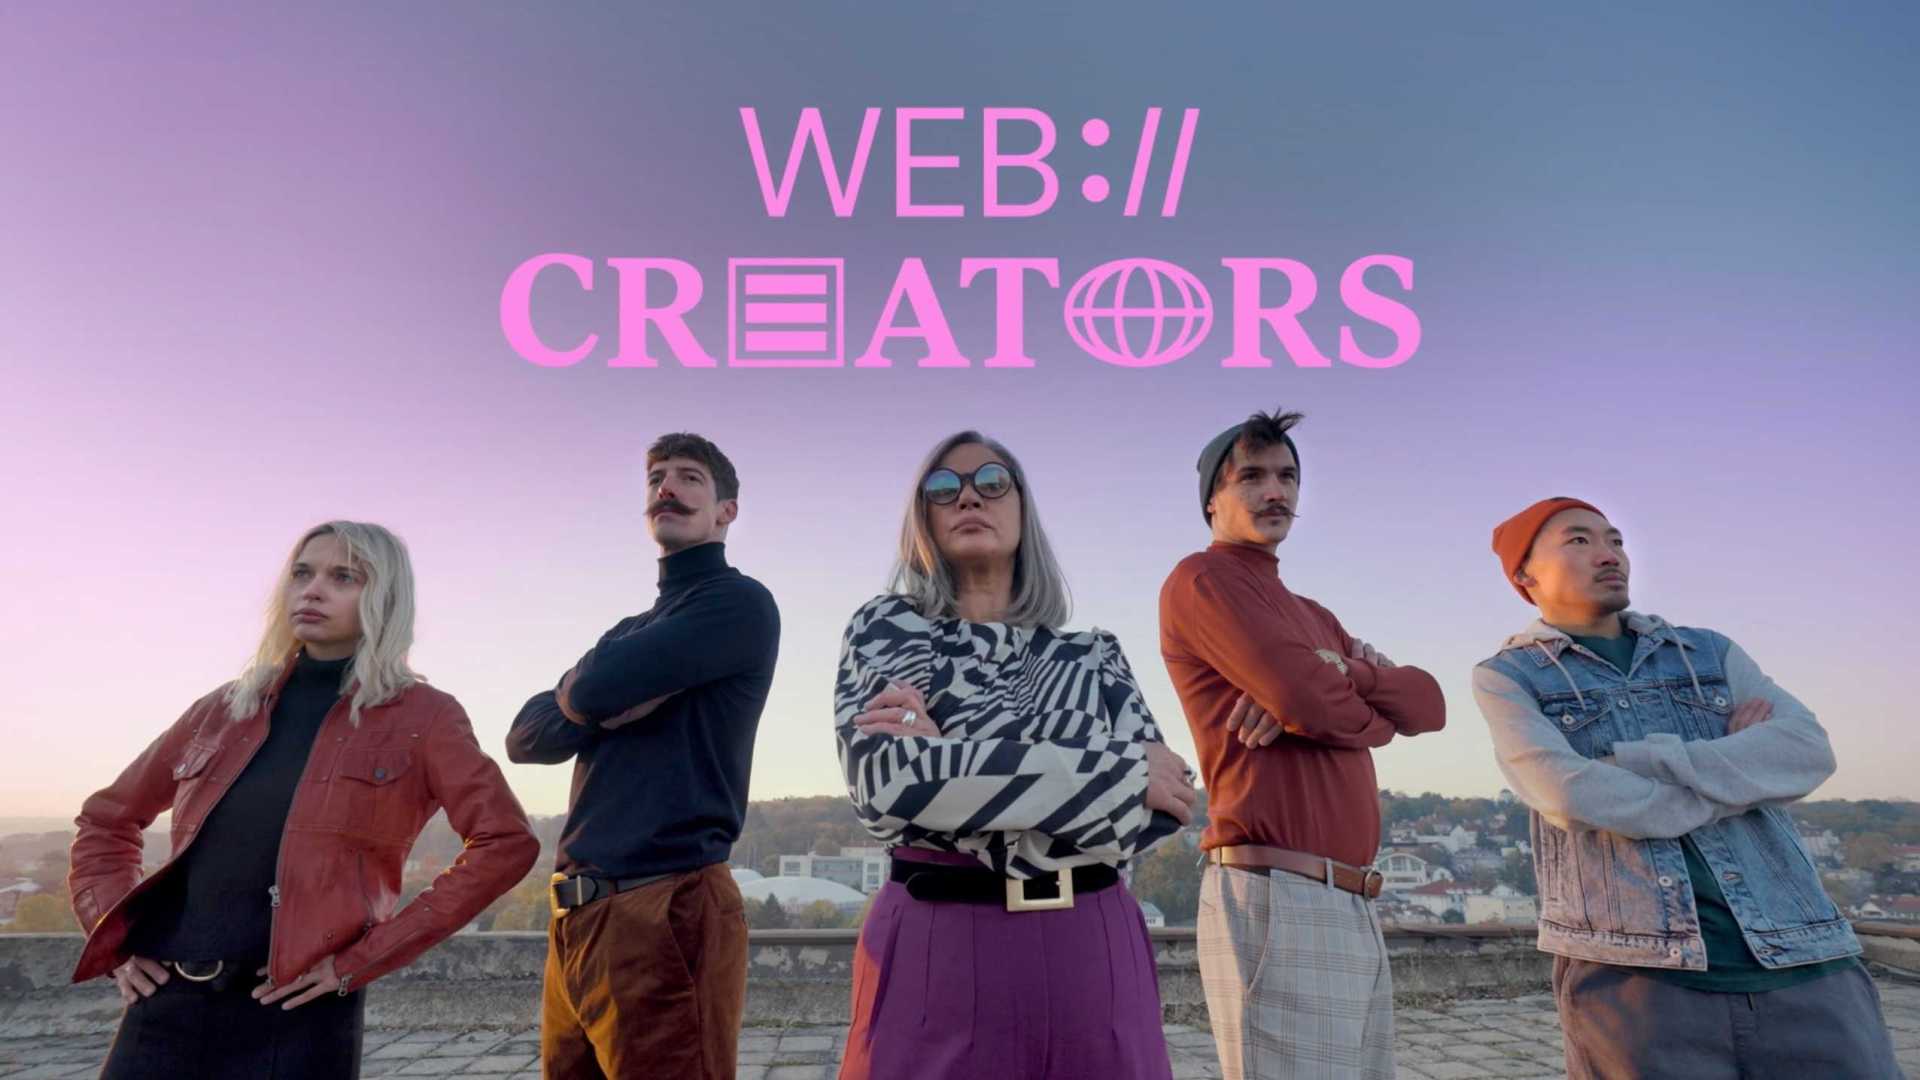 Elementor - We Are The Web Creators